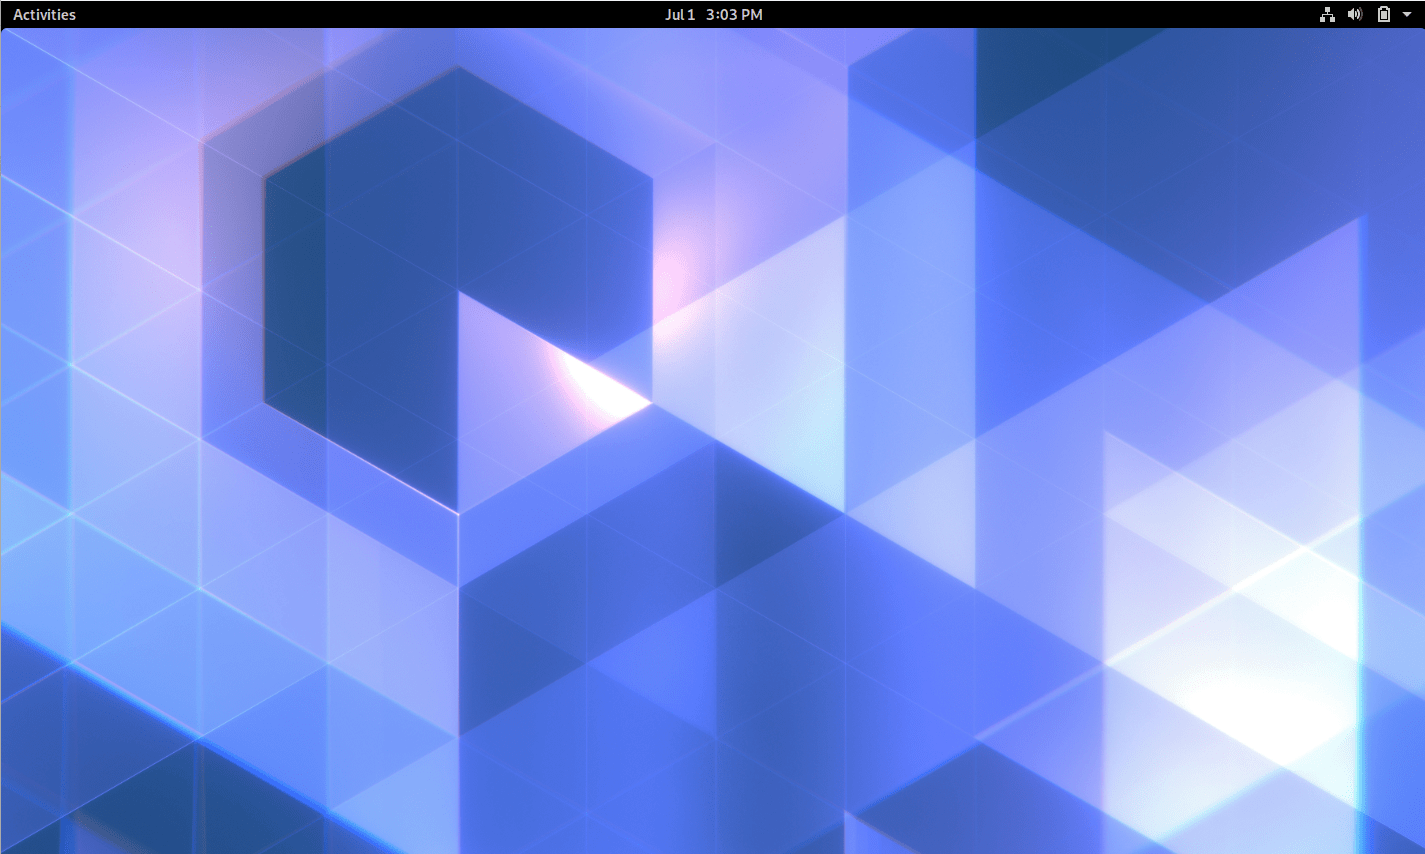 Log In to New Desktop in Ubuntu